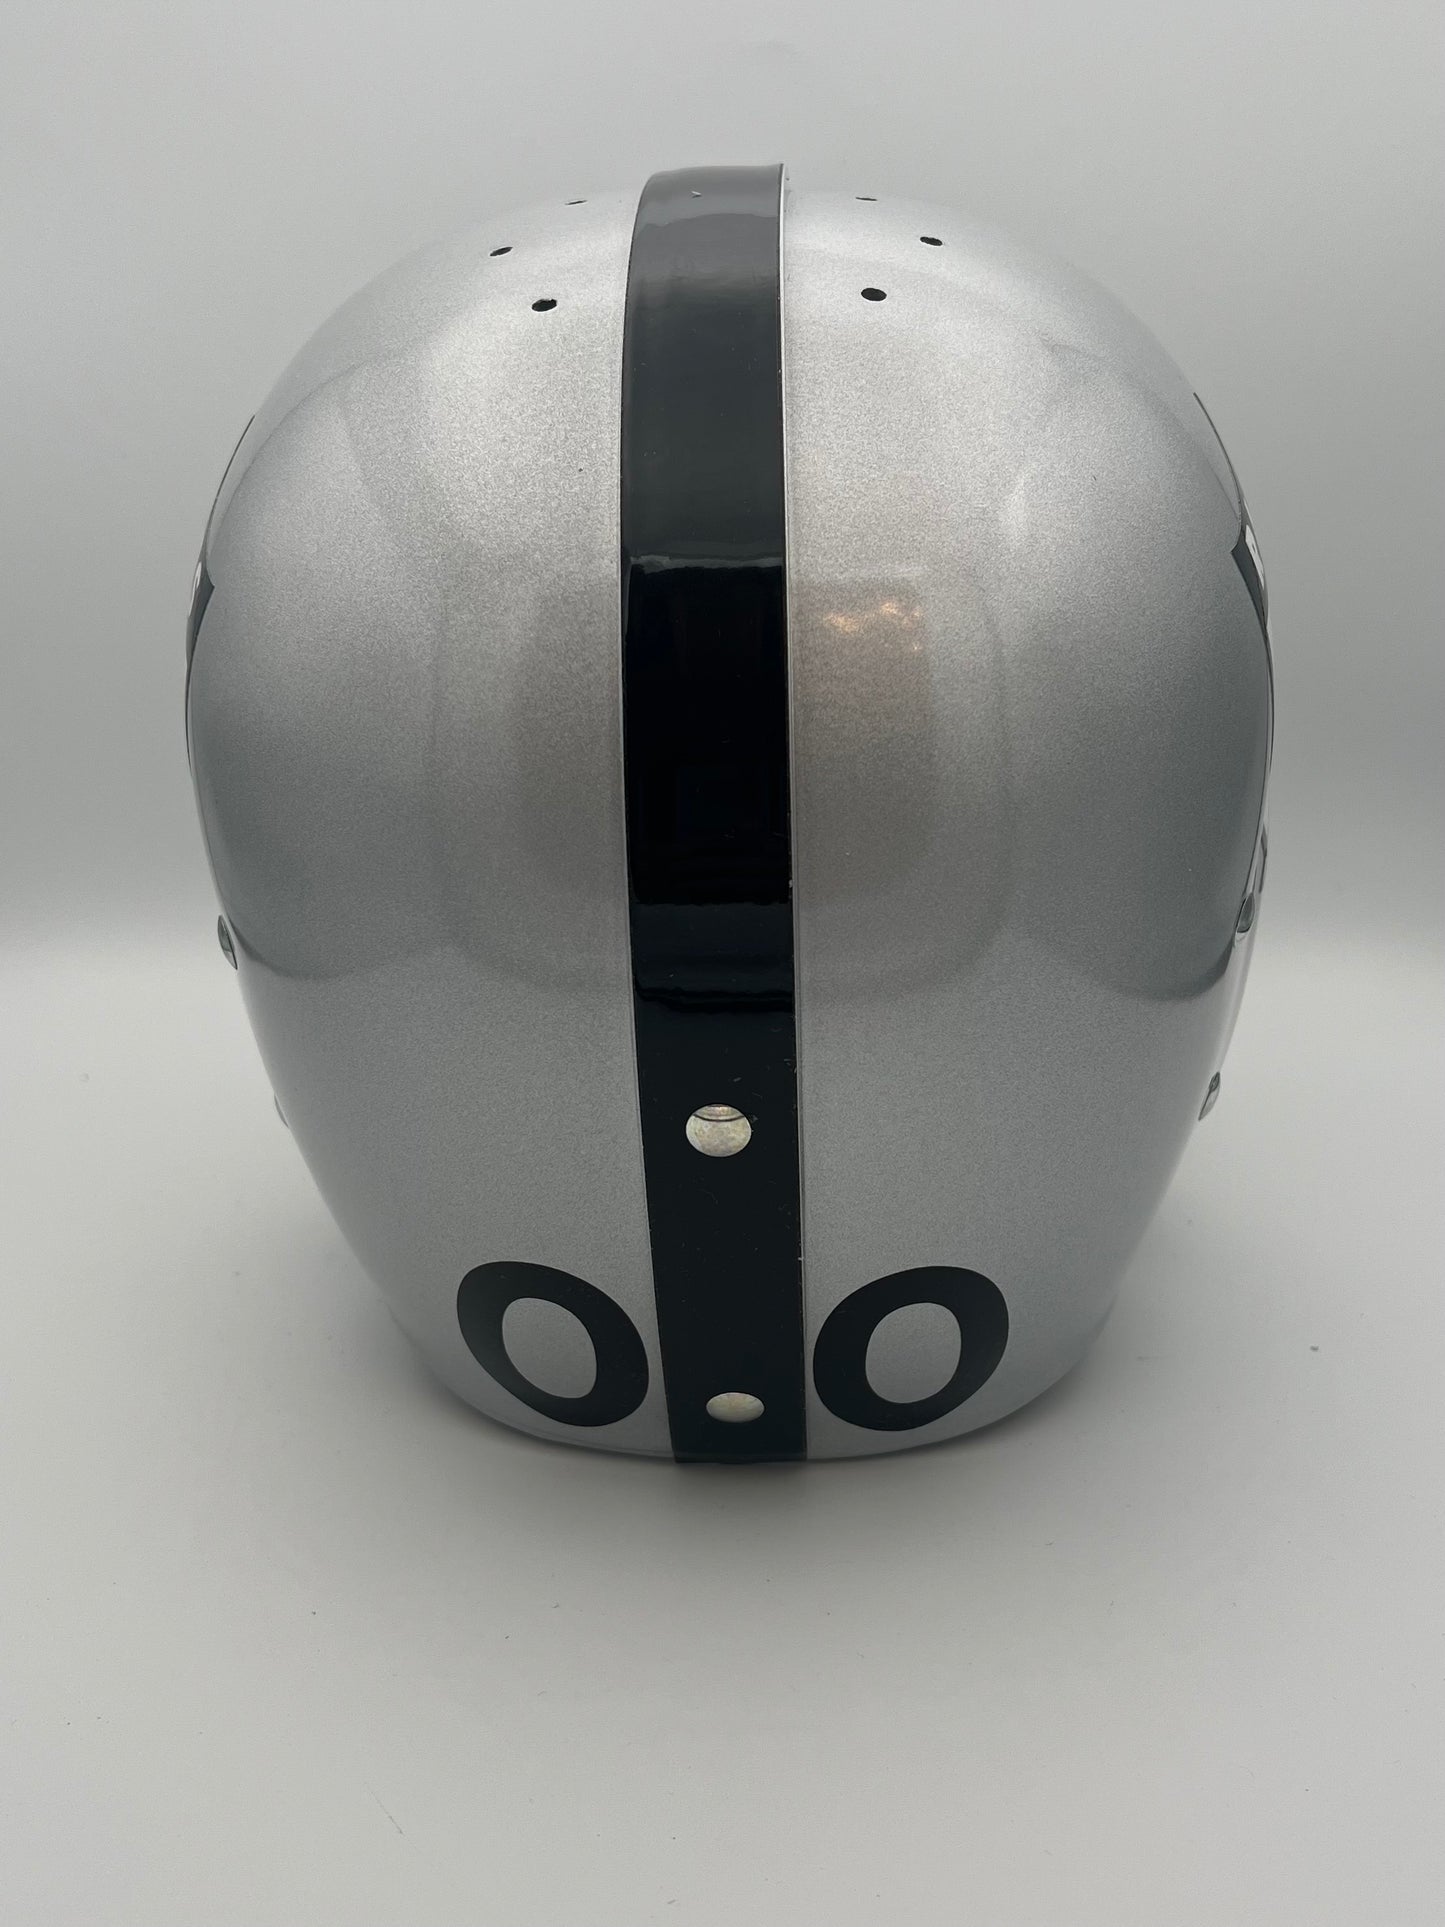 Oakland Raiders RK Vintage 1963 Style Football Helmet Jim Otto Sports Mem, Cards & Fan Shop:Game Used Memorabilia:Football-NFL:Helmet WESTBROOKSPORTSCARDS   